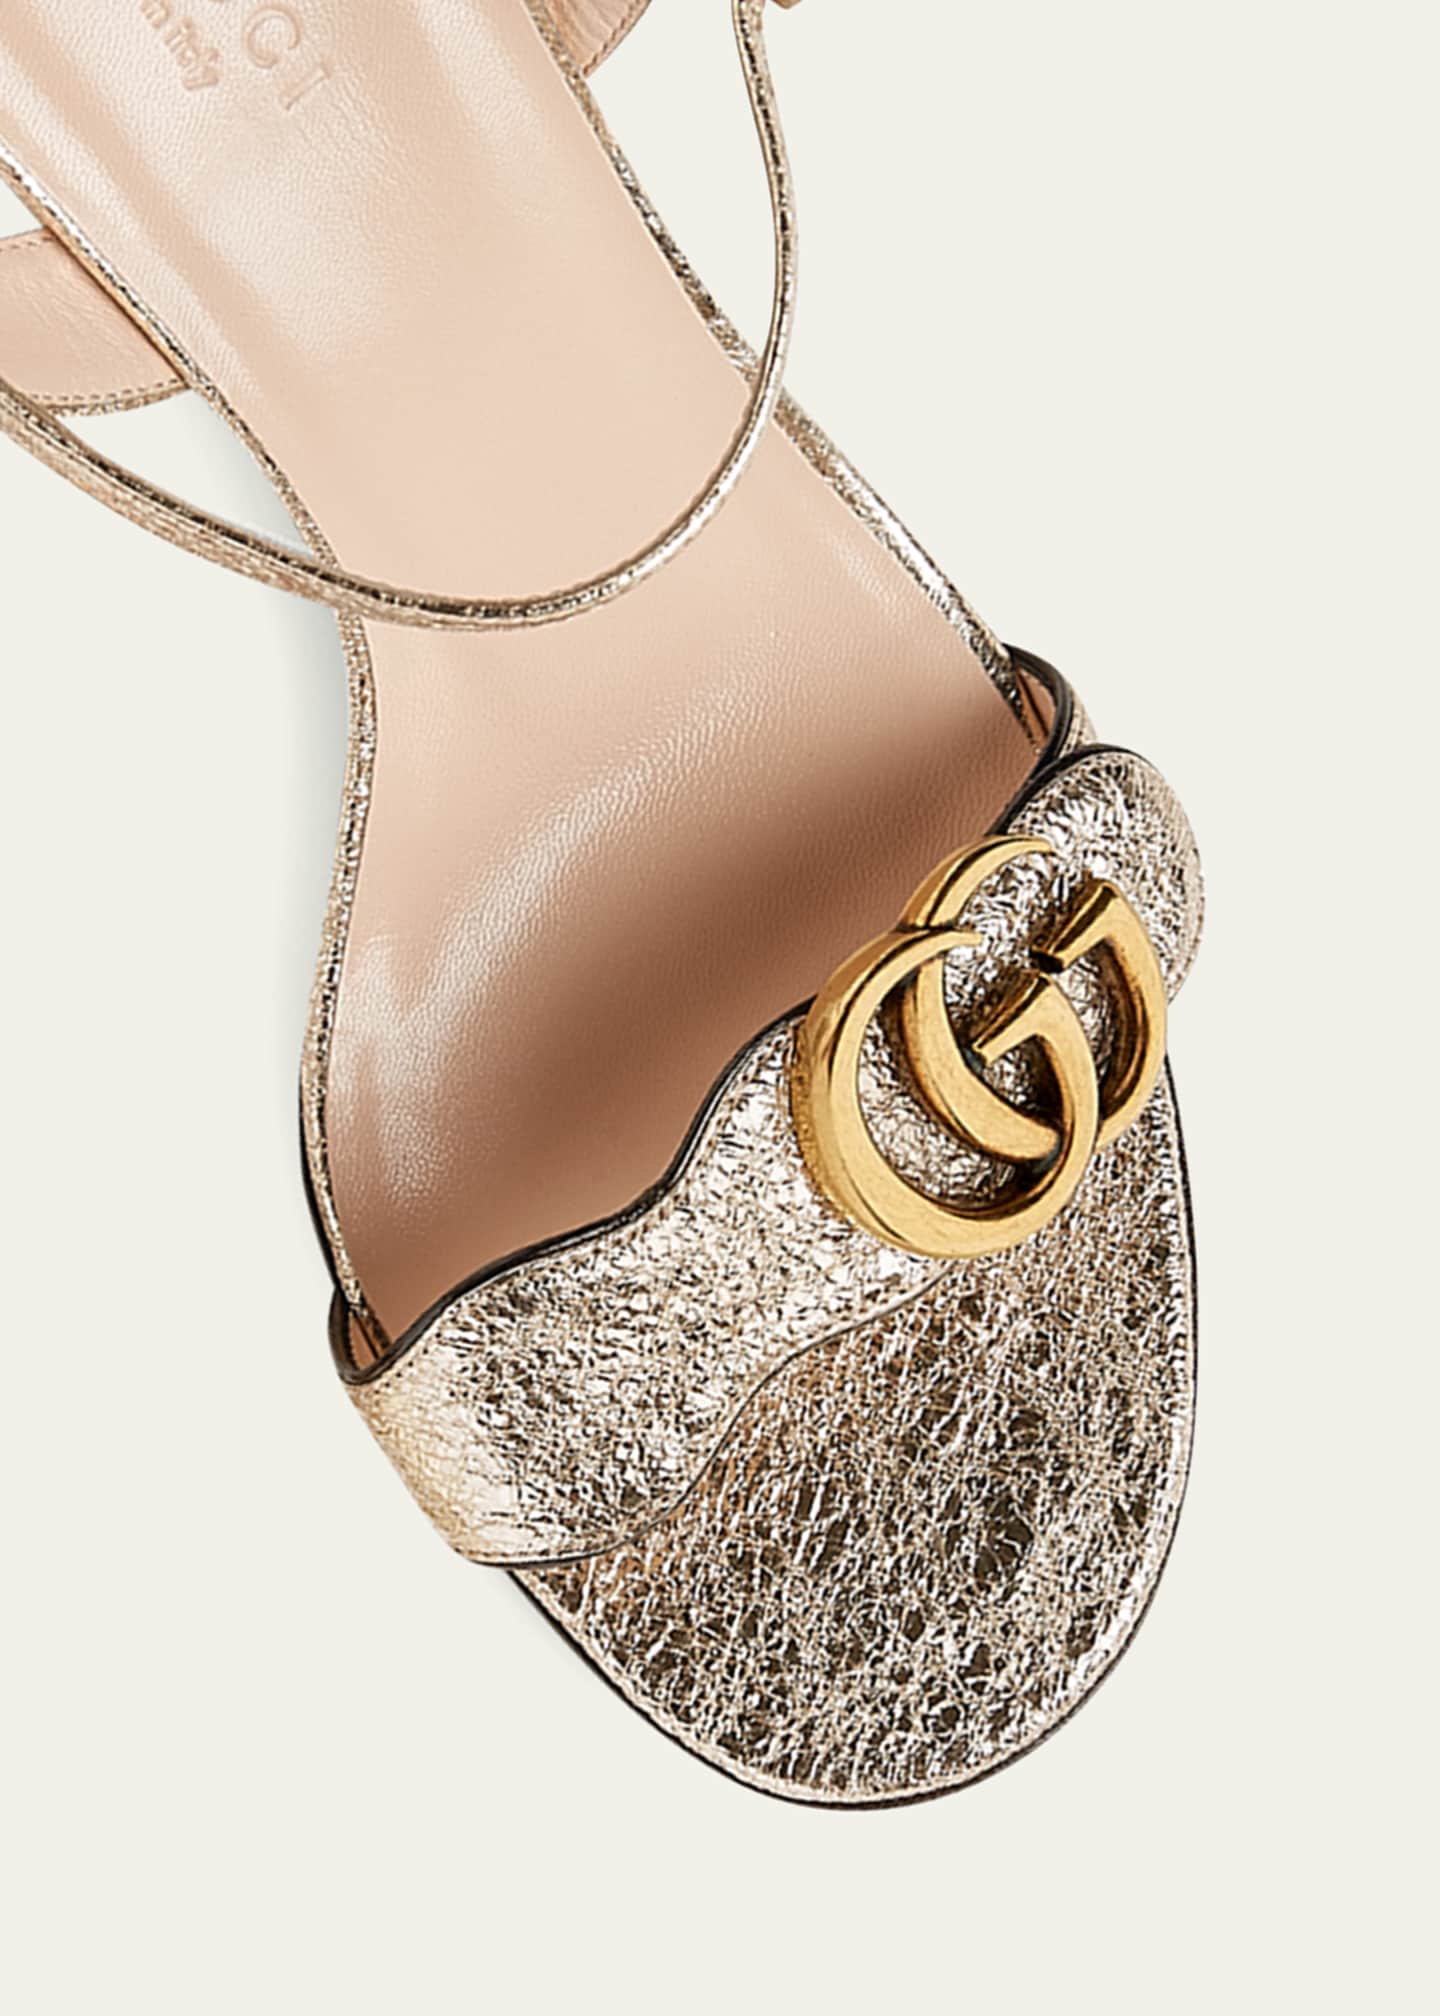 Gucci Marmont Metallic High-Heel Sandals Image 3 of 3